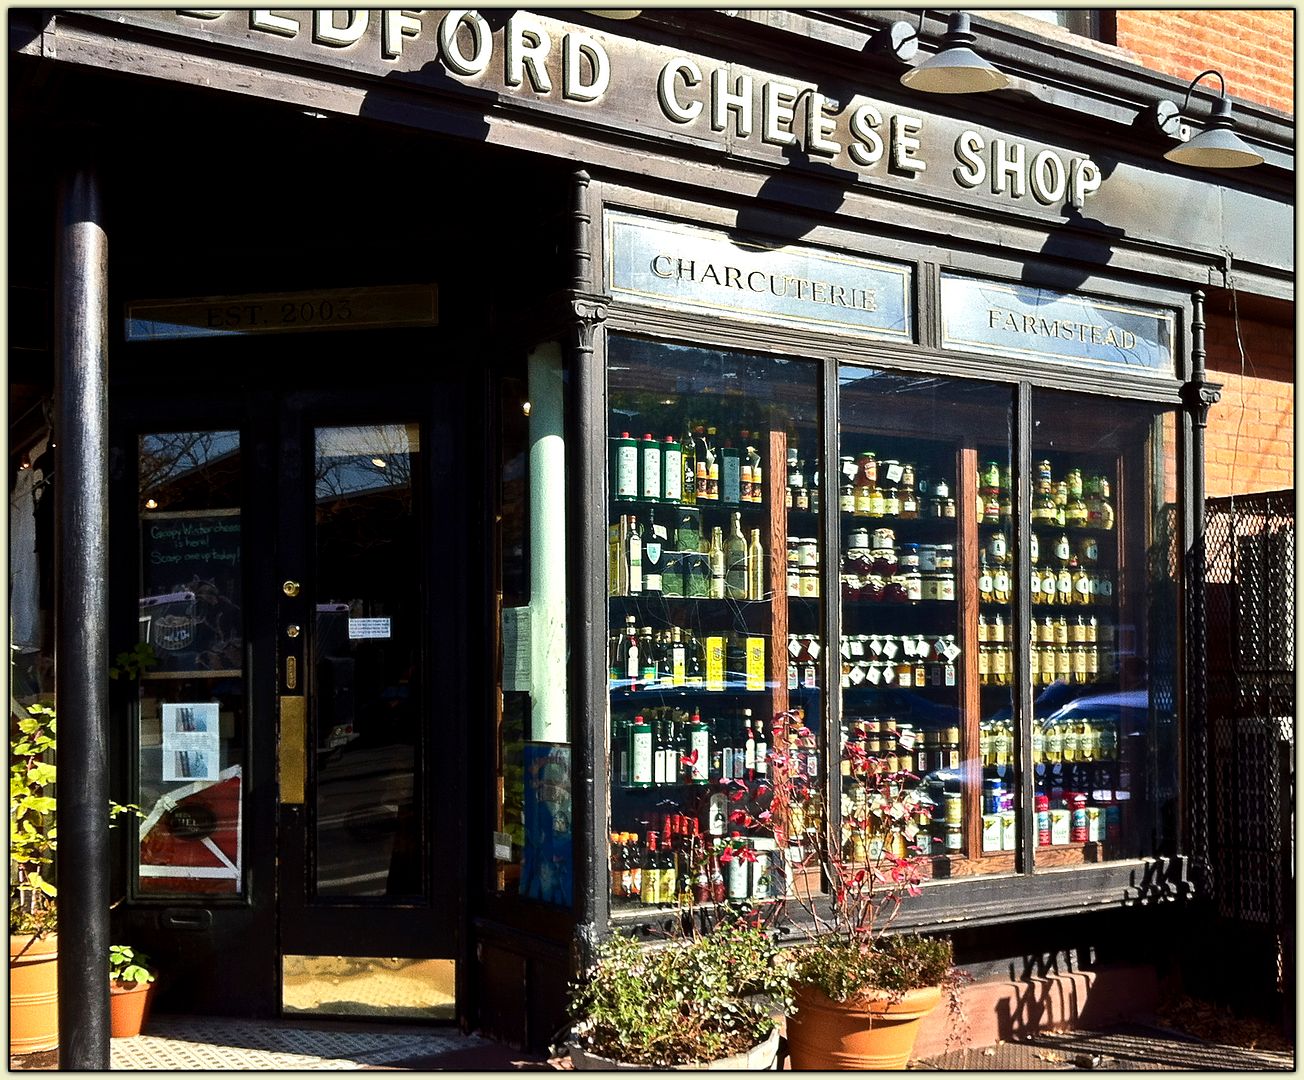 Bedford Cheese Shop Exterior